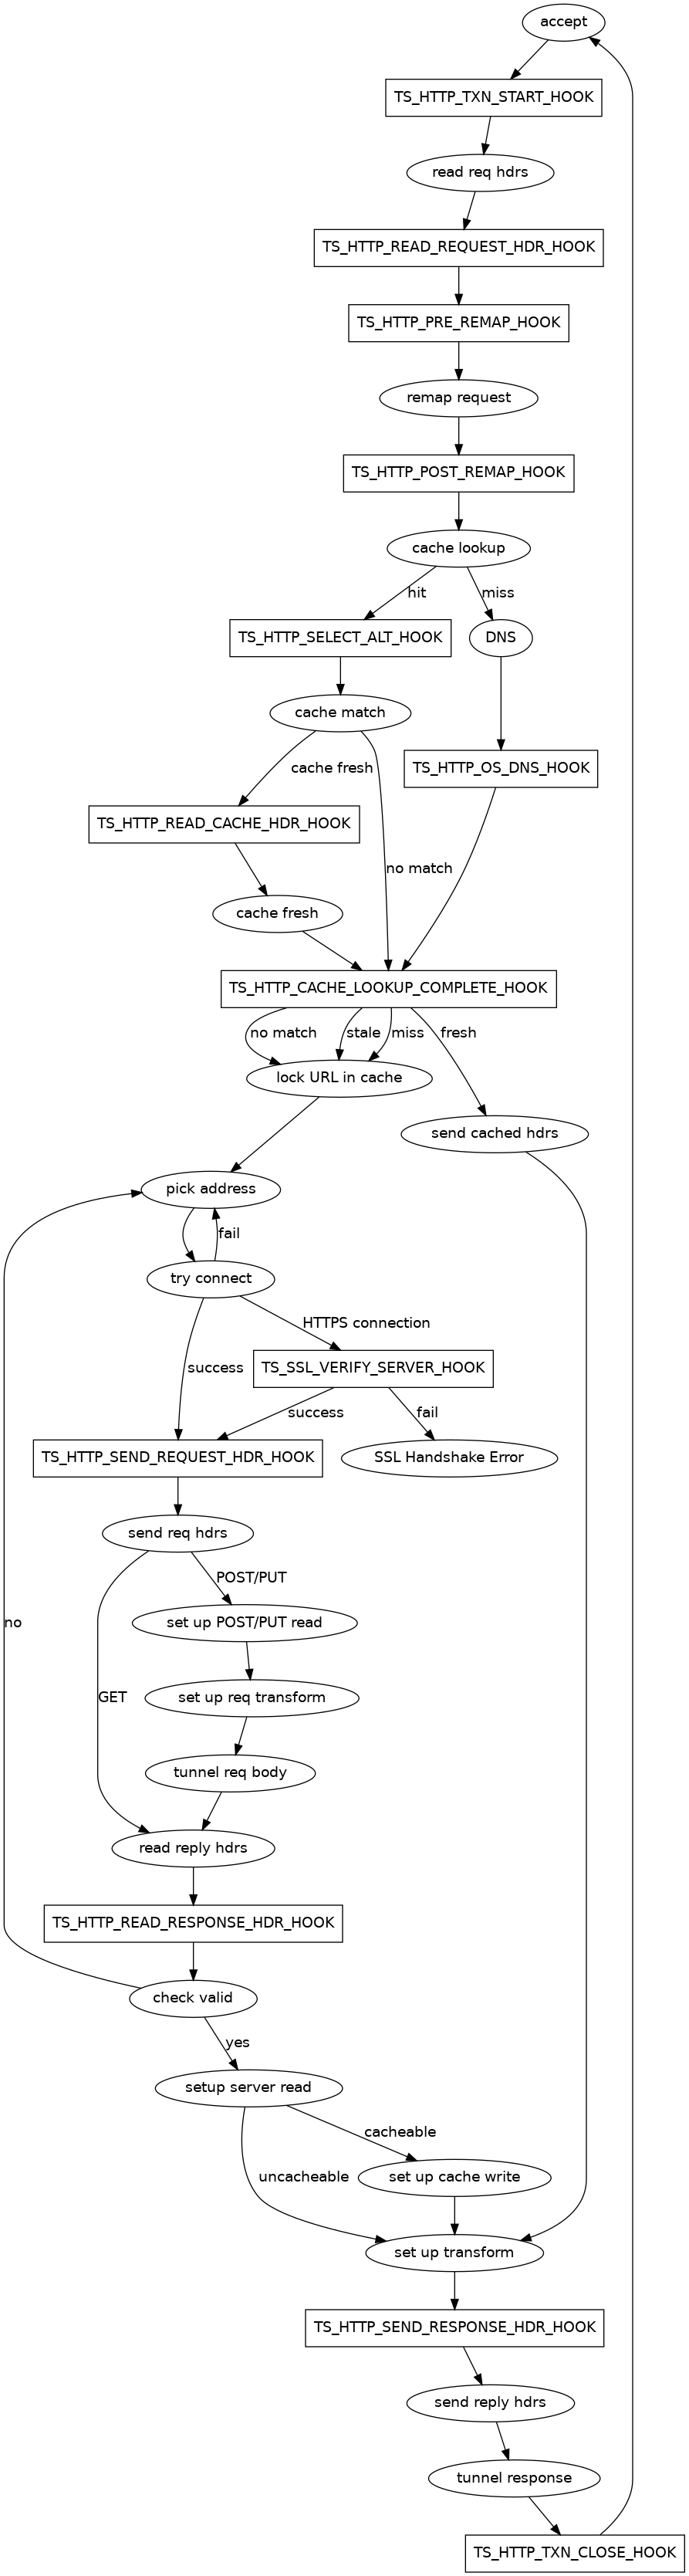 HTTP Transaction State Diagram